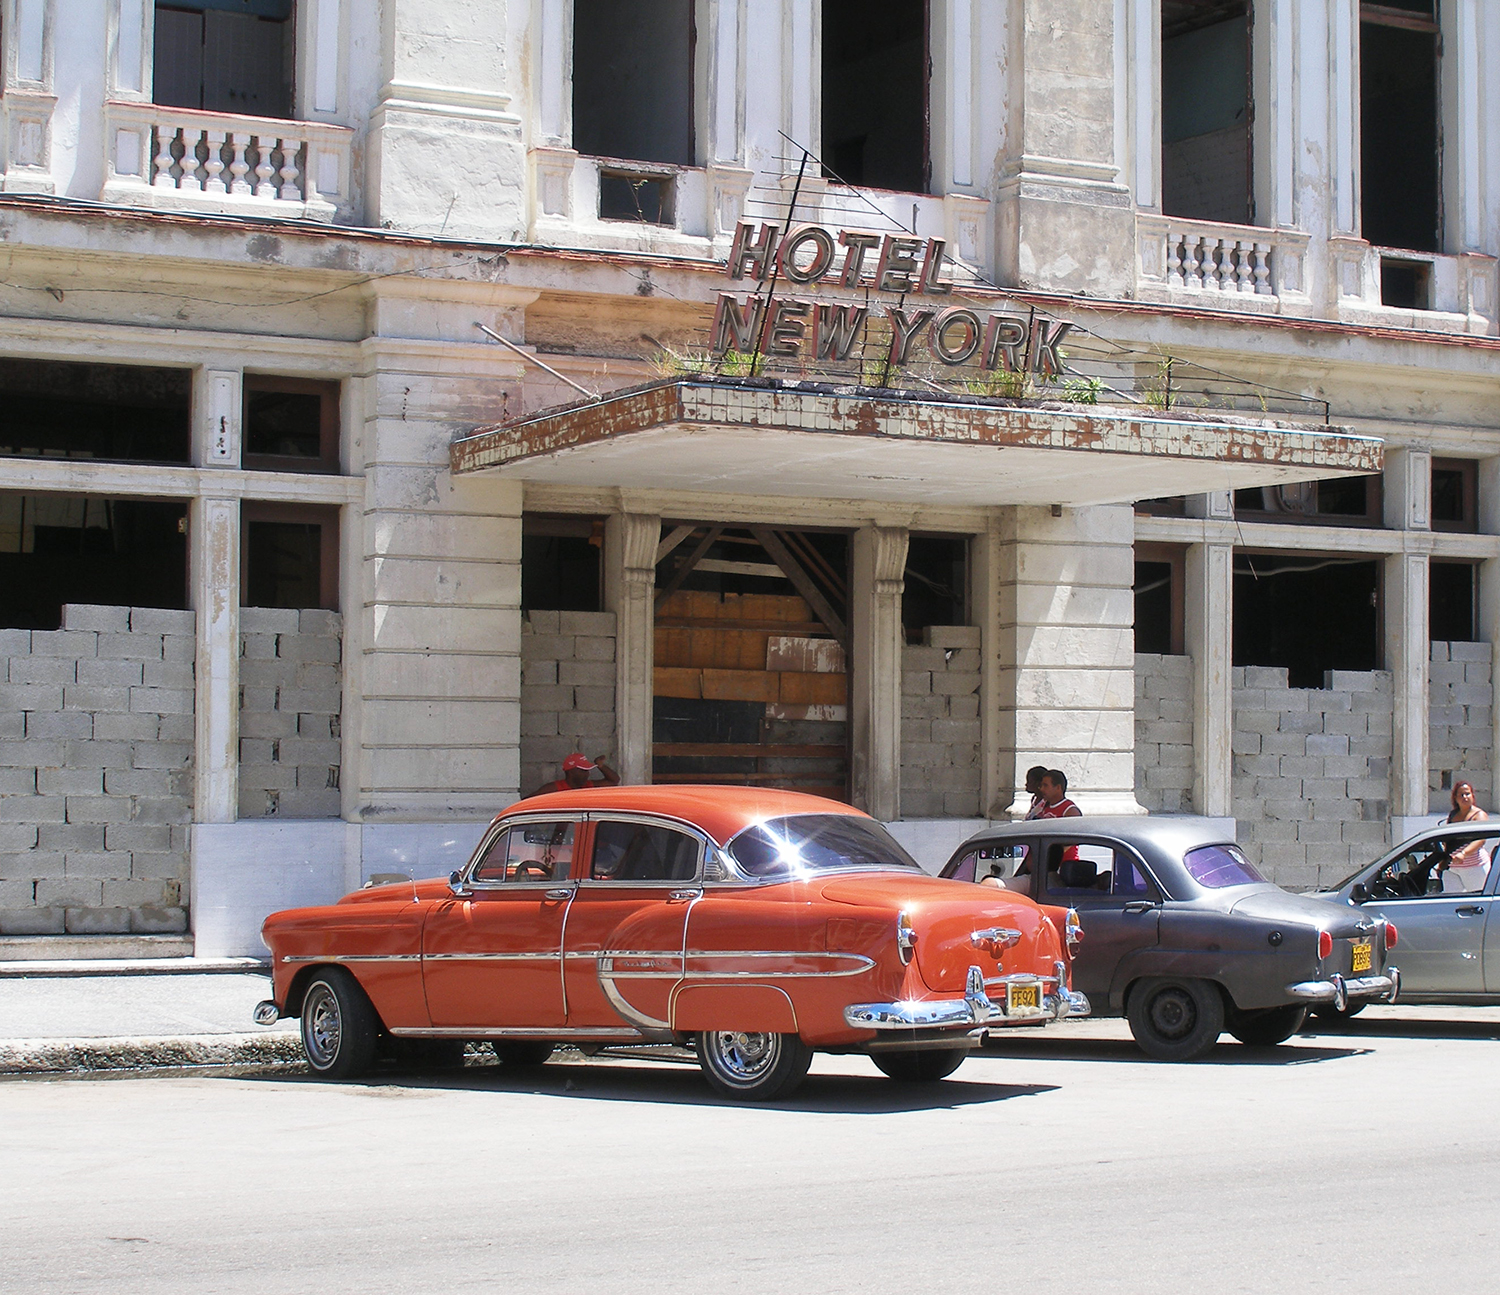 Cuba_Hotel_New_York_Havana.jpg